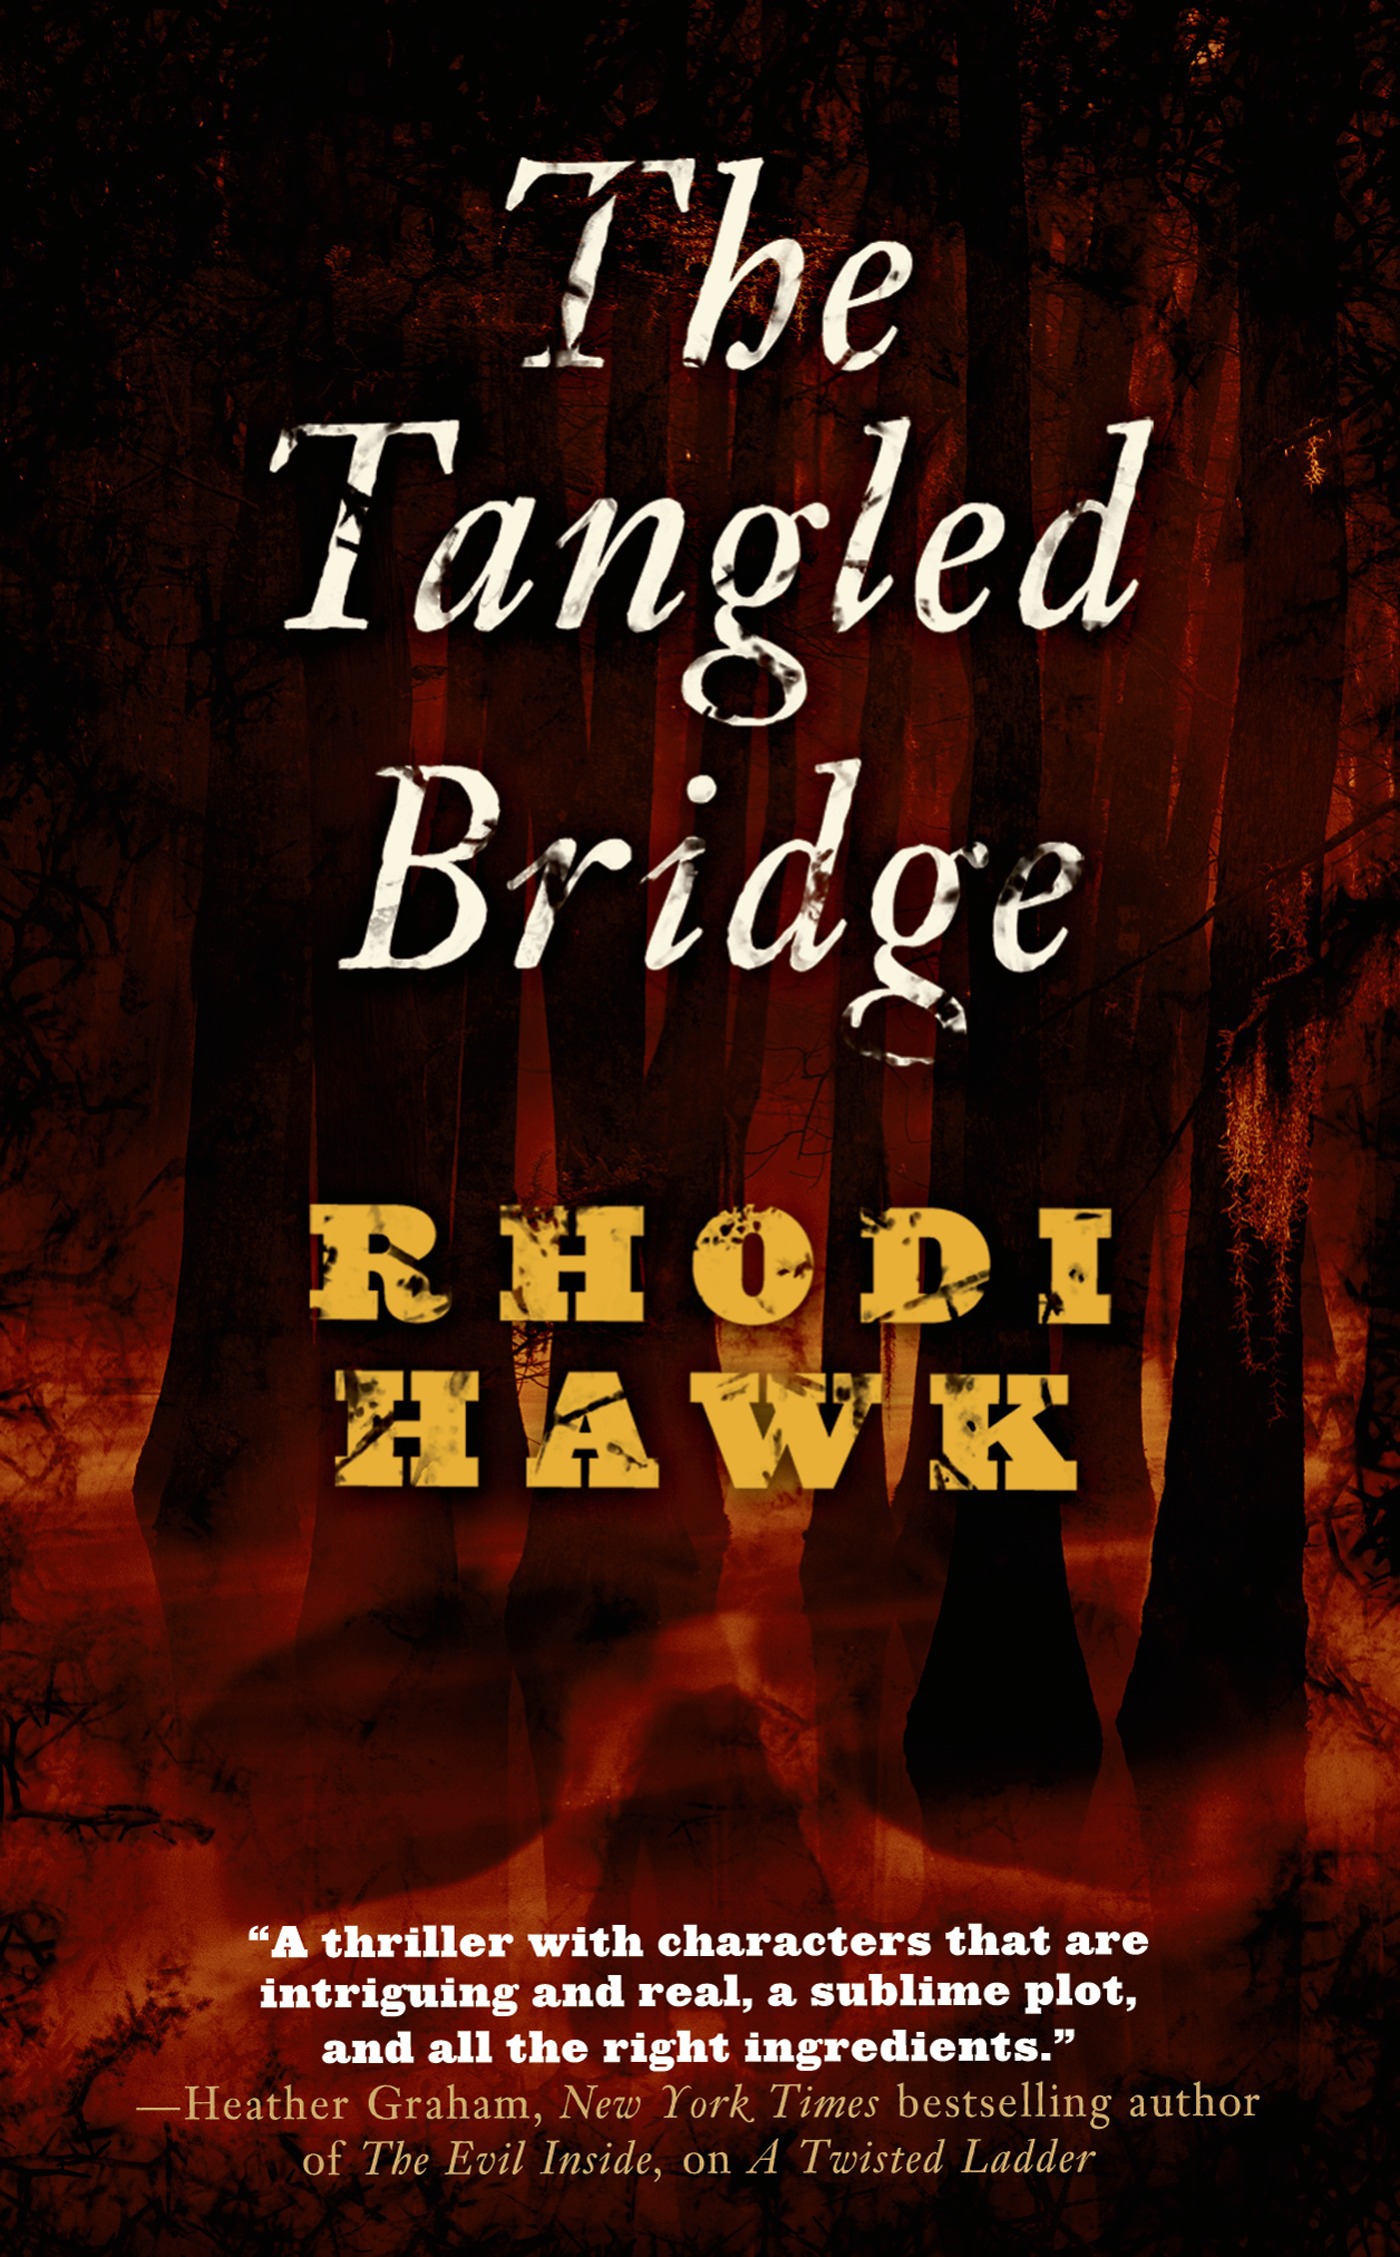 The Tangled Bridge by Rhodi Hawk